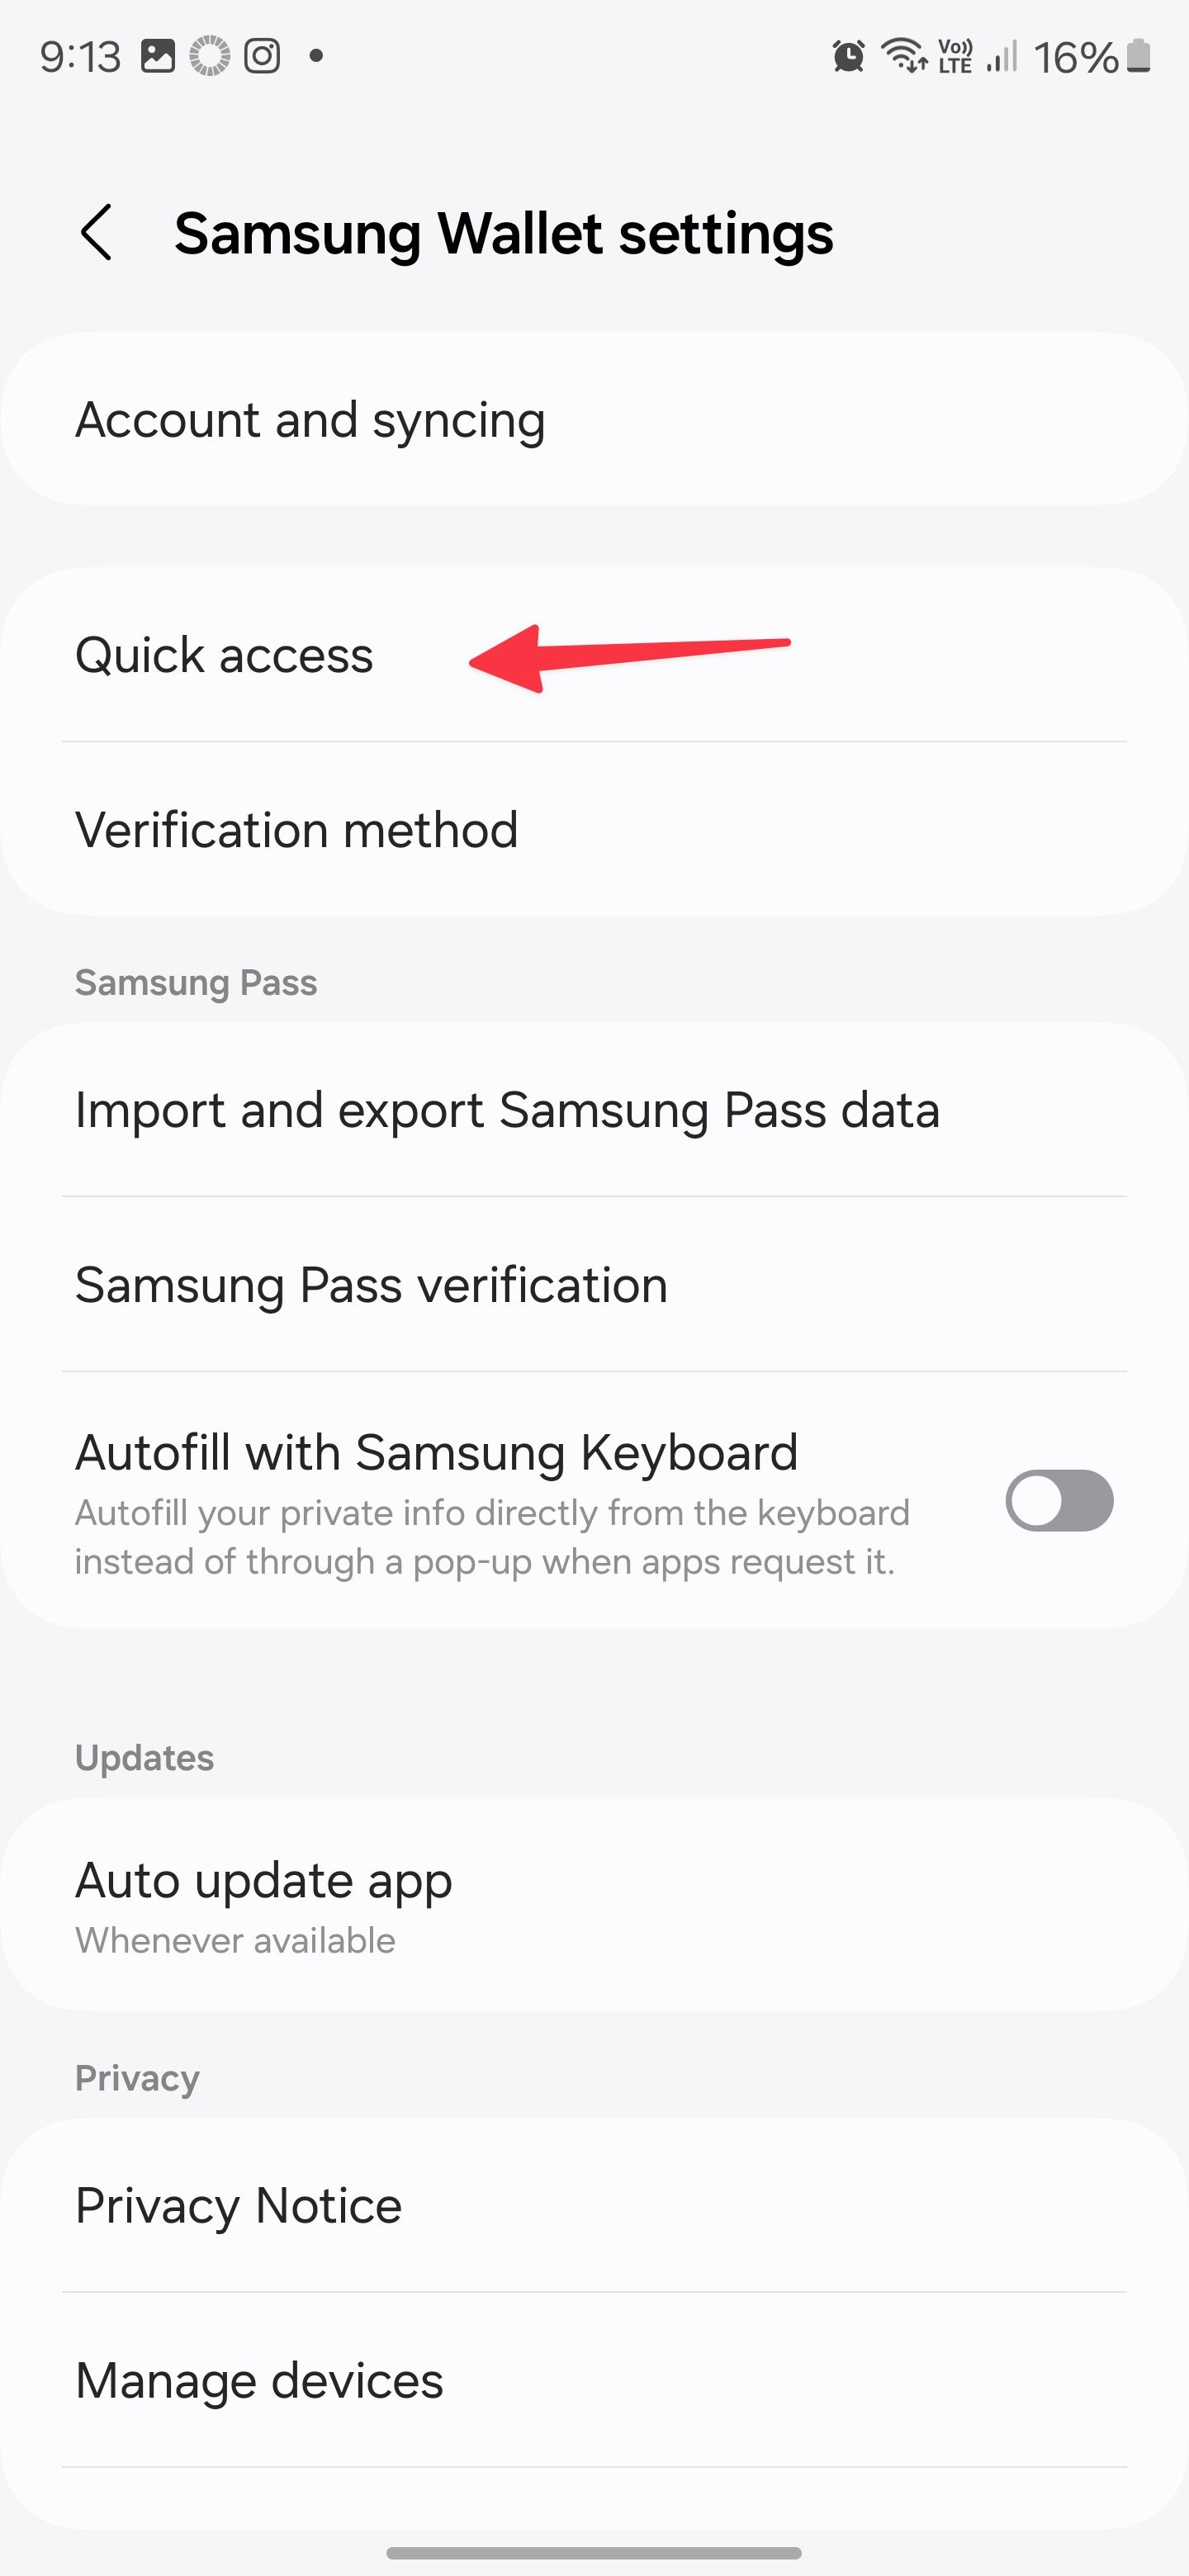 Samsung wallet settings